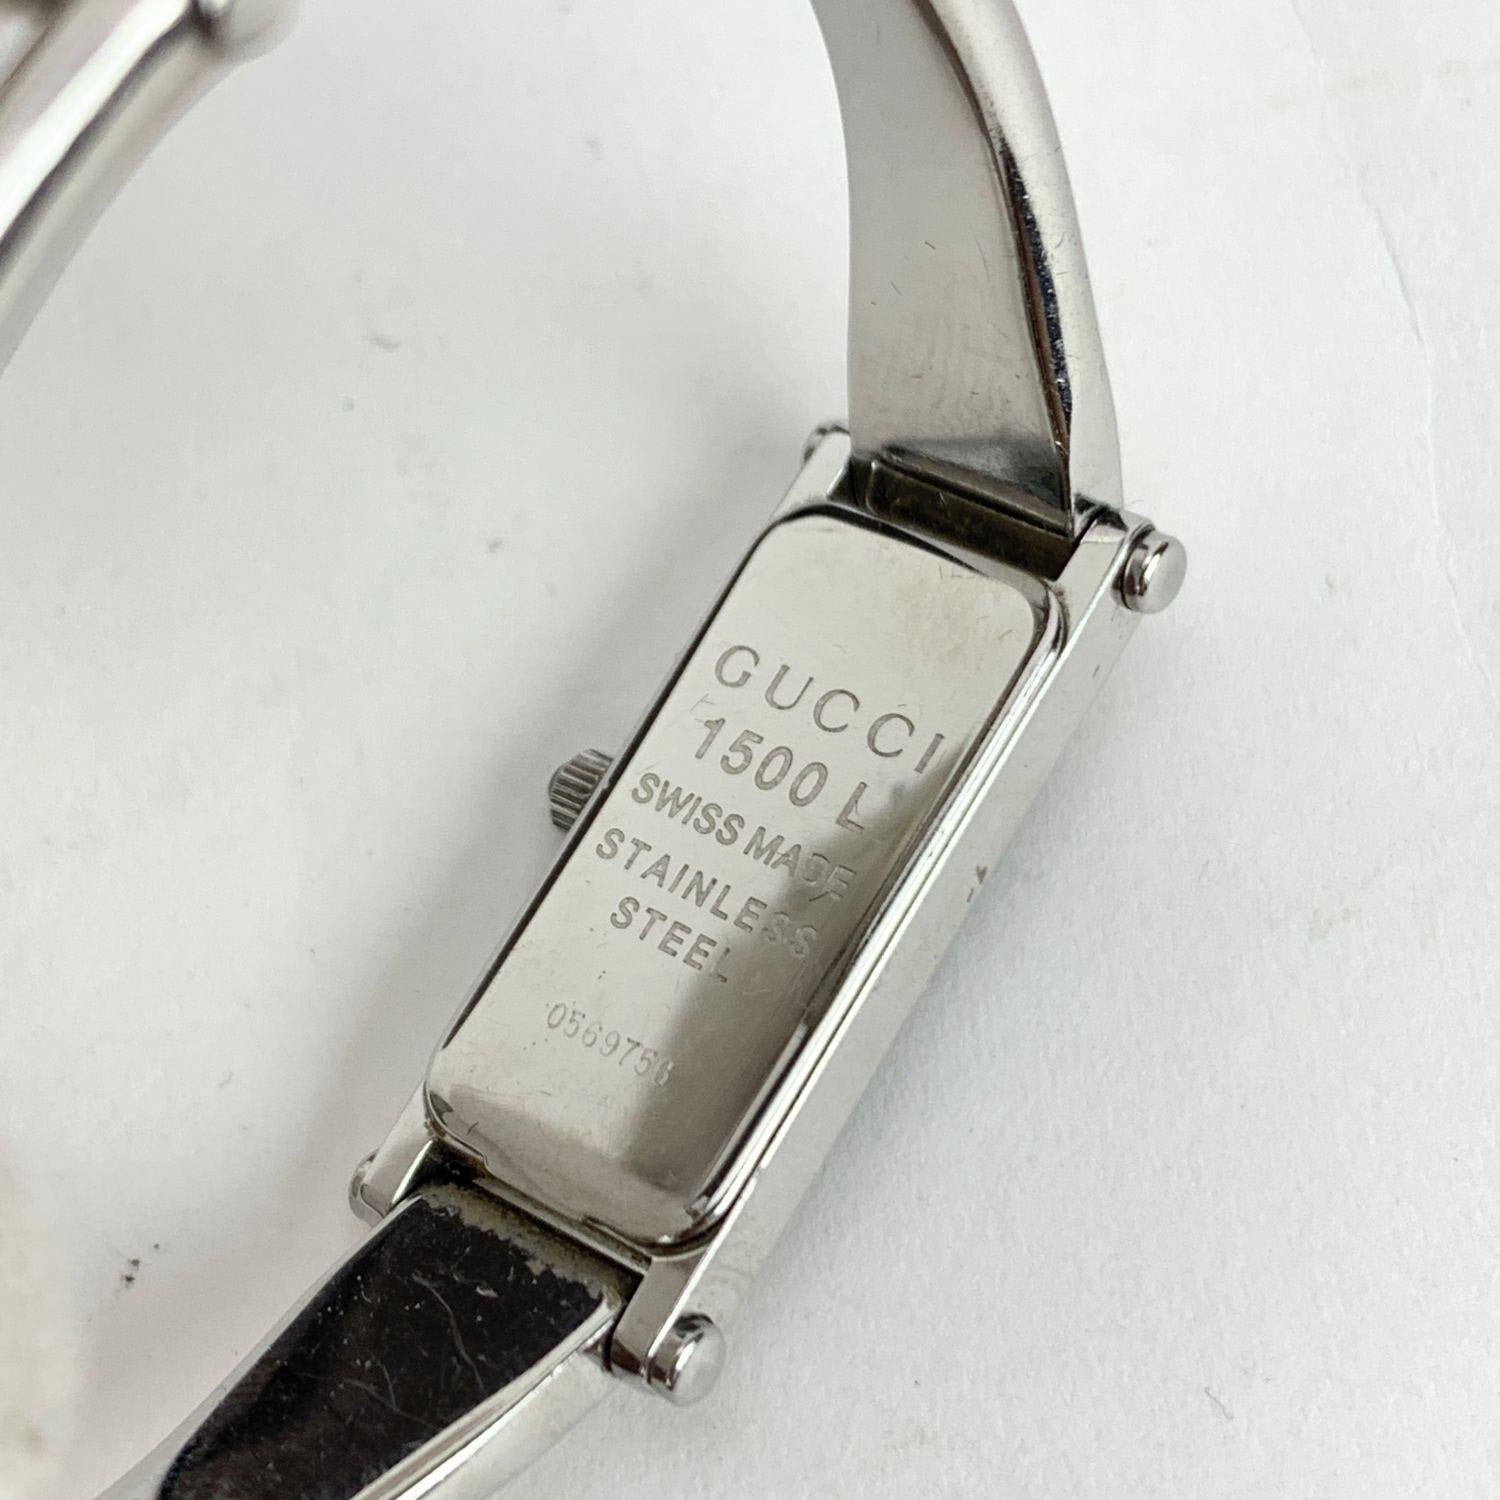 Gucci Stainless Steel Women Wrist Watch Mod 1500 L Black Dial 1